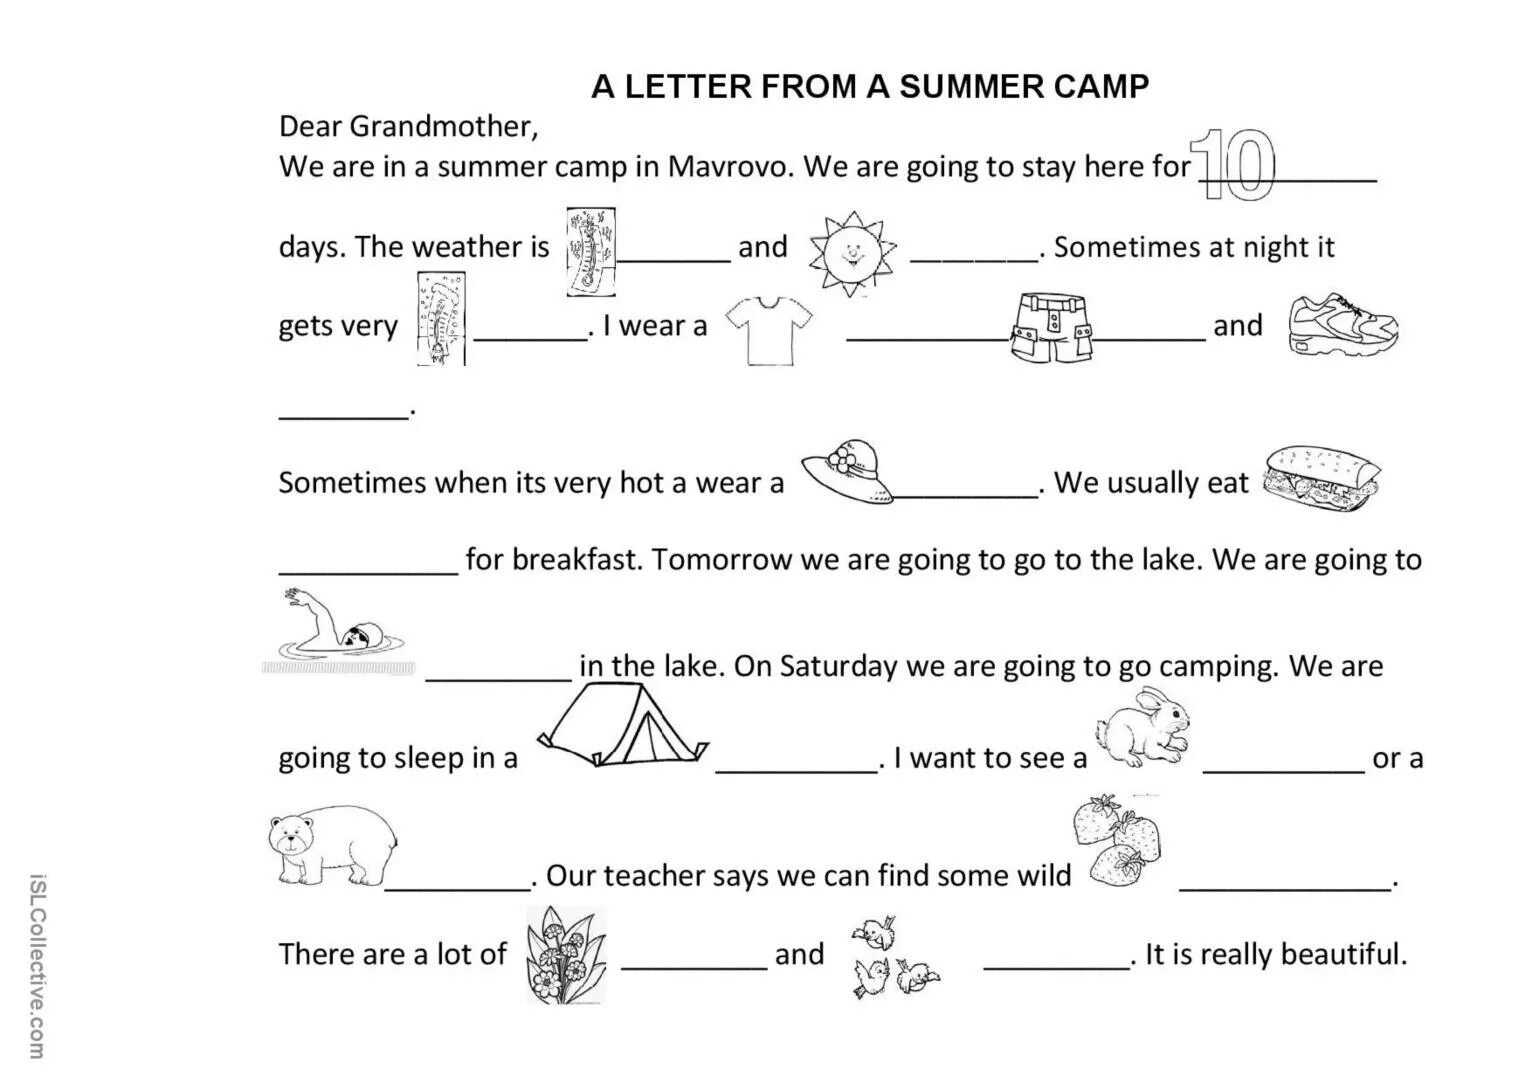 Questions about camps. Camp задания для детей. Интересные задания на Camping. Camp Worksheets. Задания по теме лето на английском.